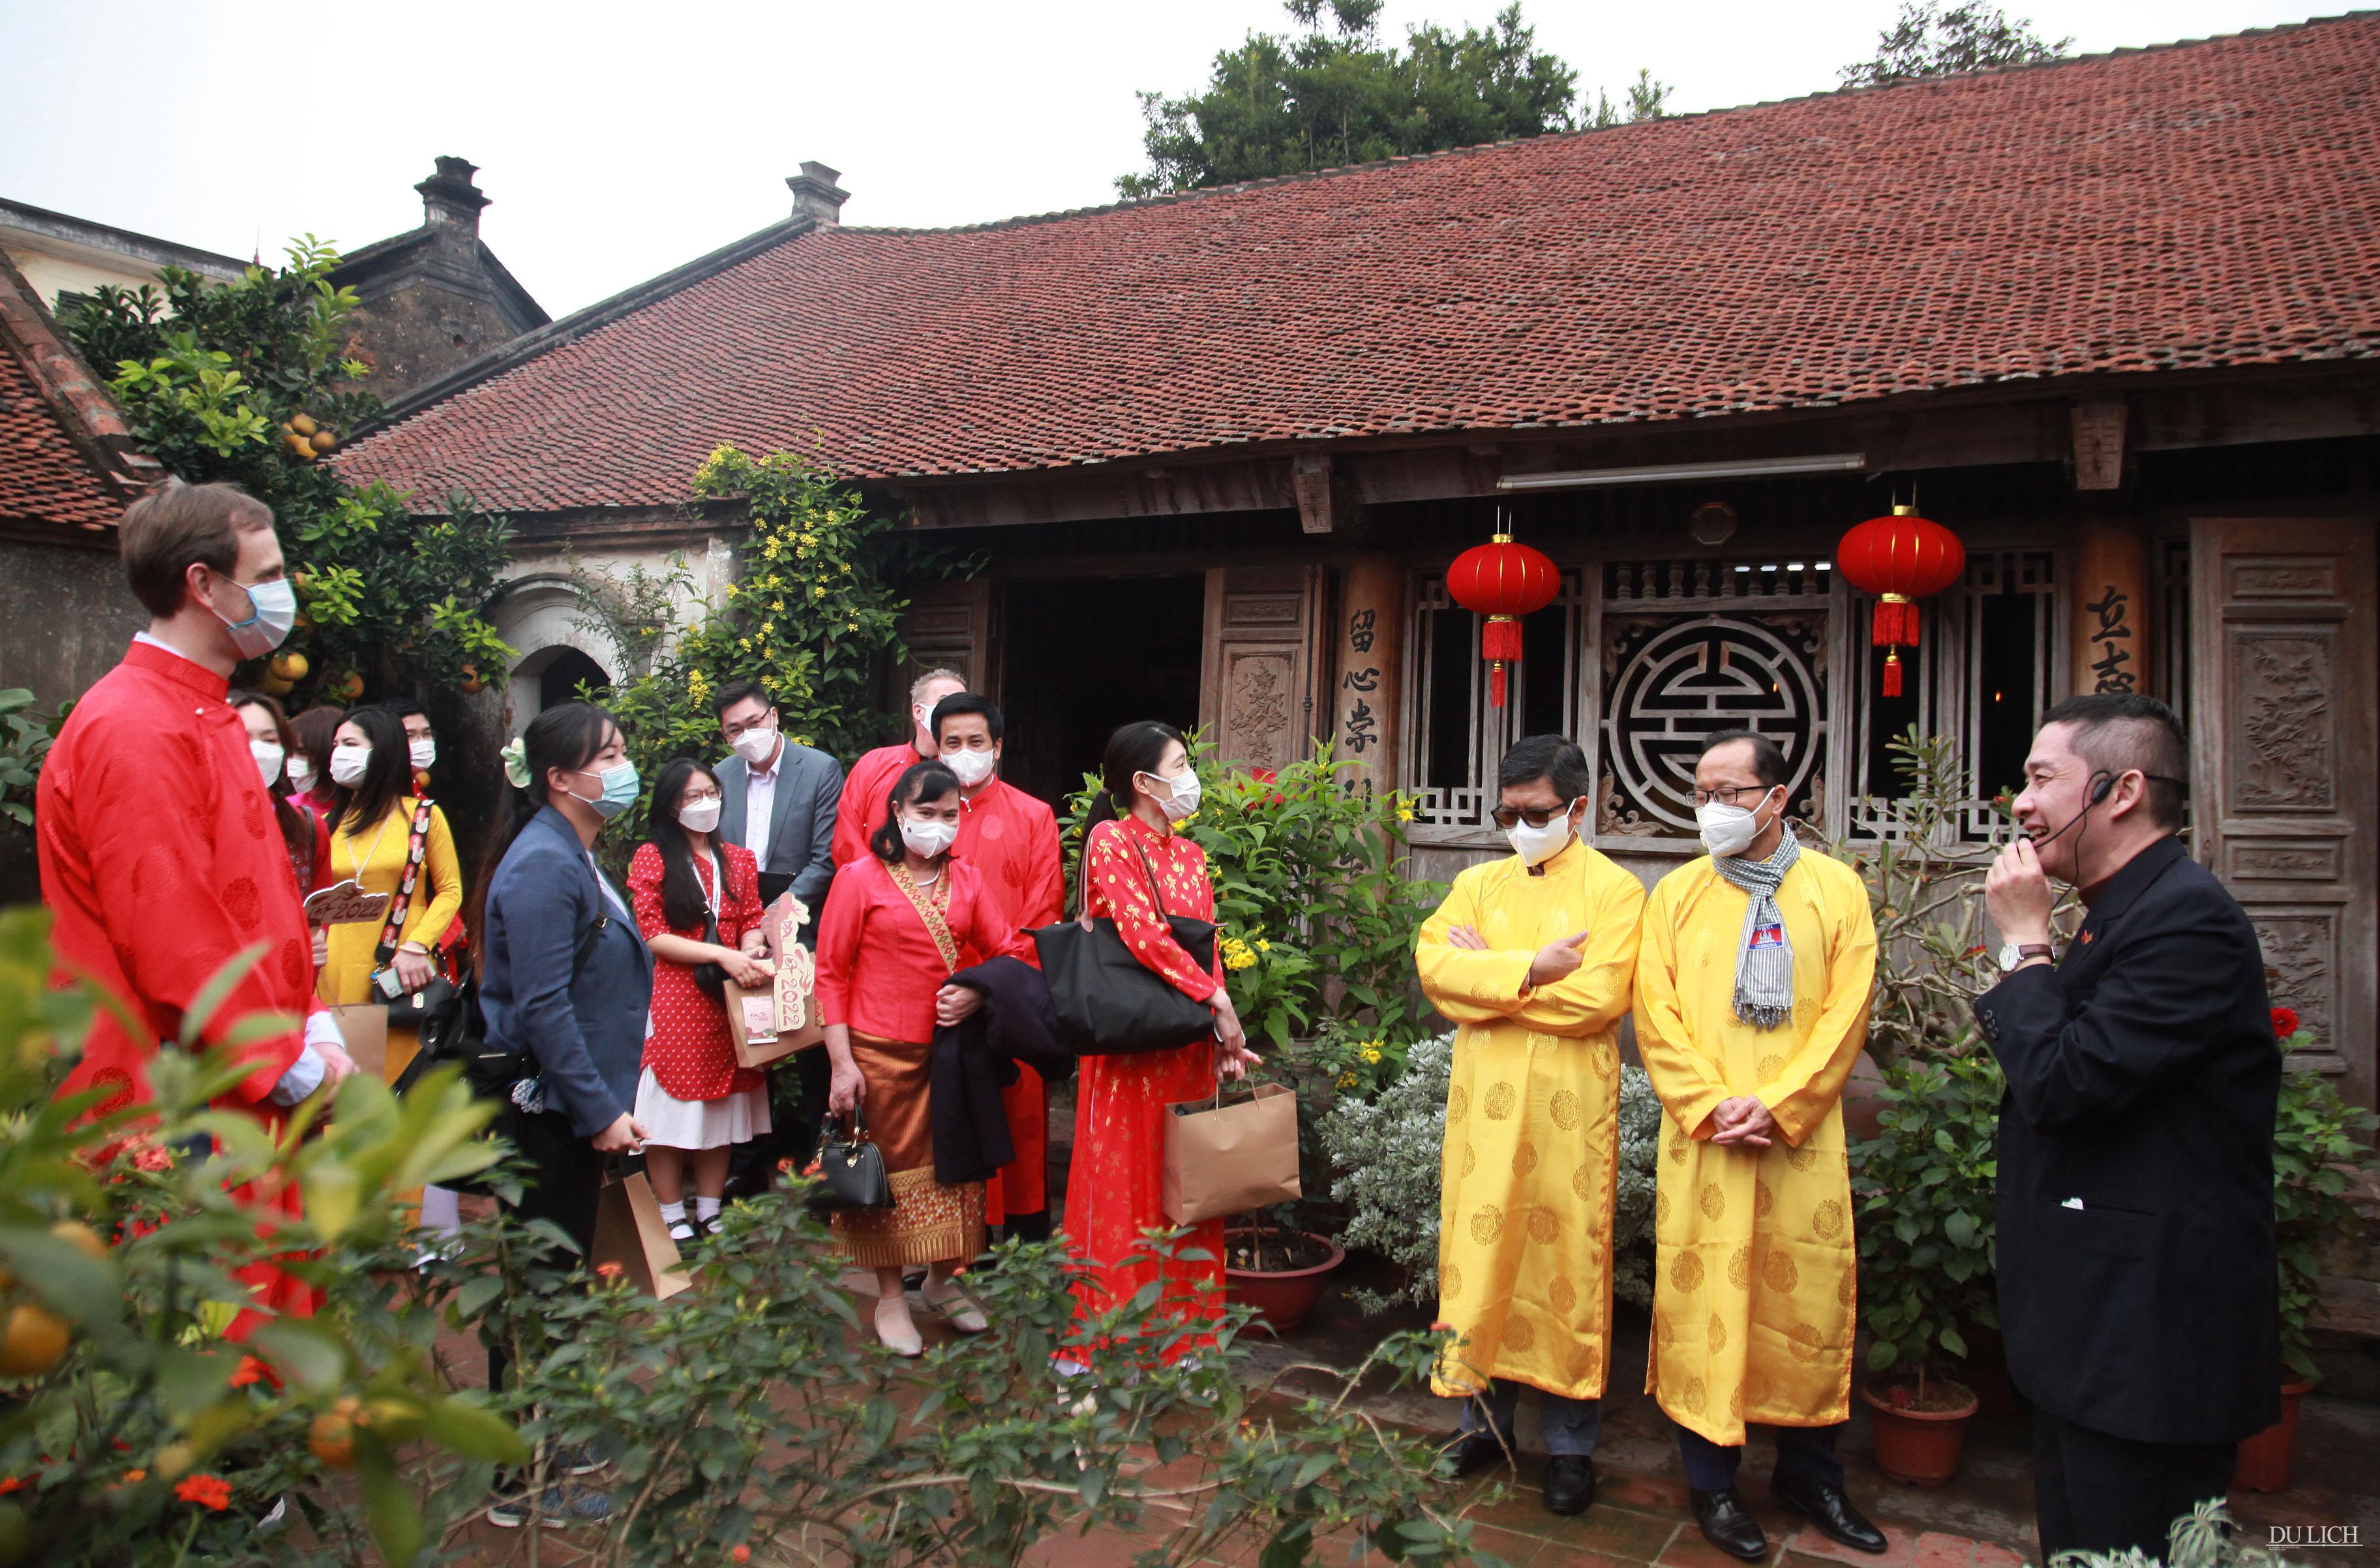 Delegates visit ancient houses in Duong Lam ancient village